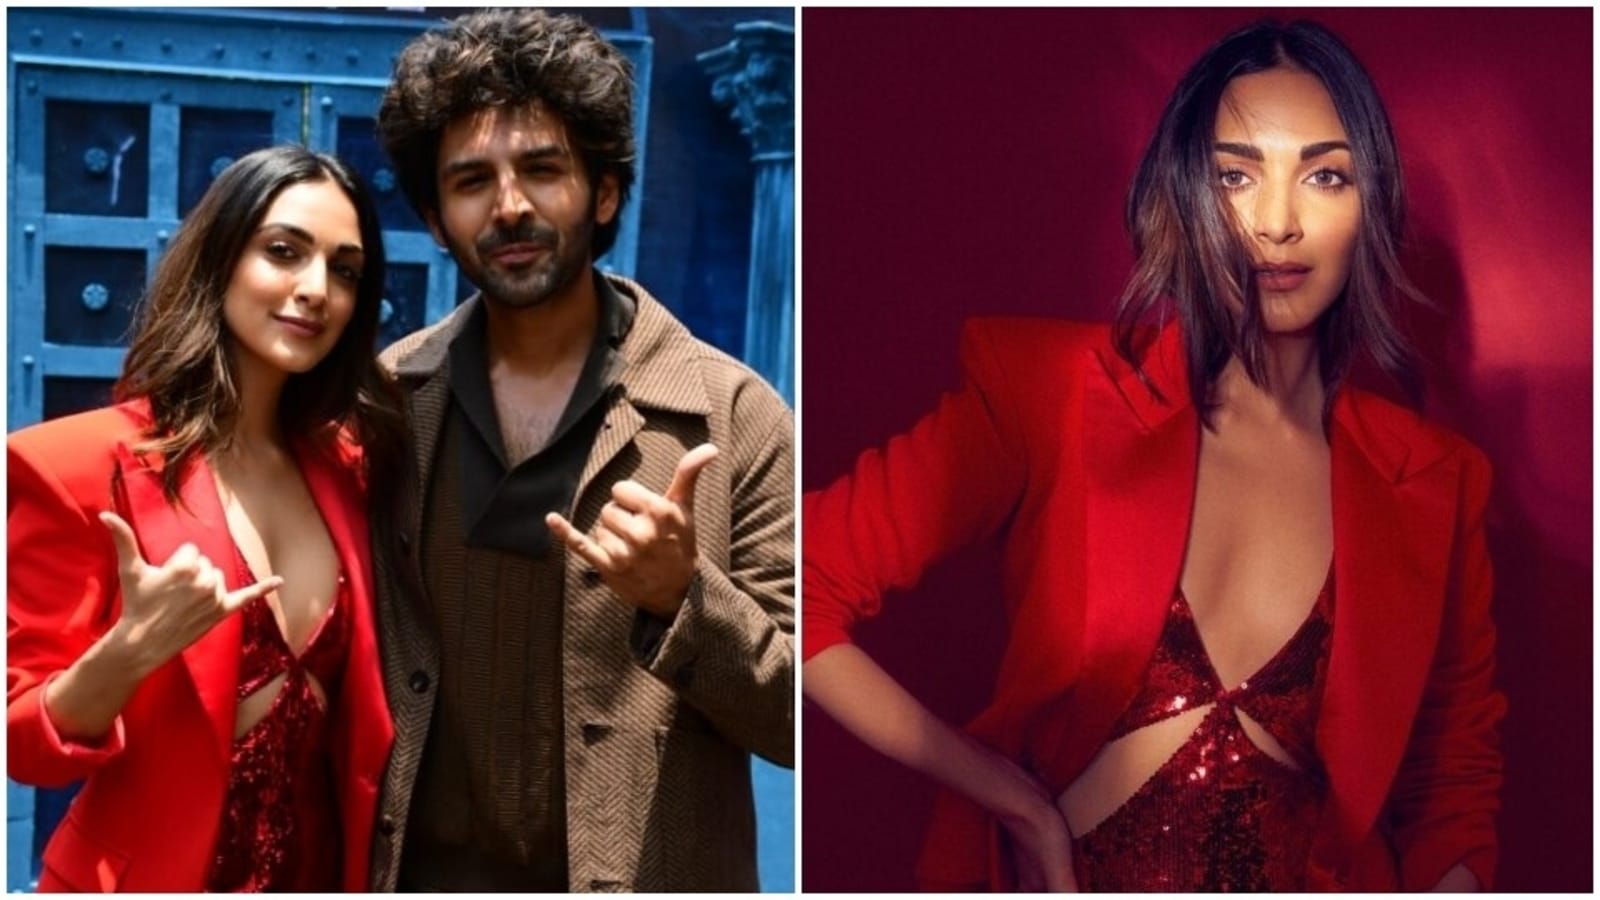 Kiara Advani launches Bhool Bhulaiyaa 2 trailer with Kartik Aaryan in hot red cut-out mini dress and blazer: See pics